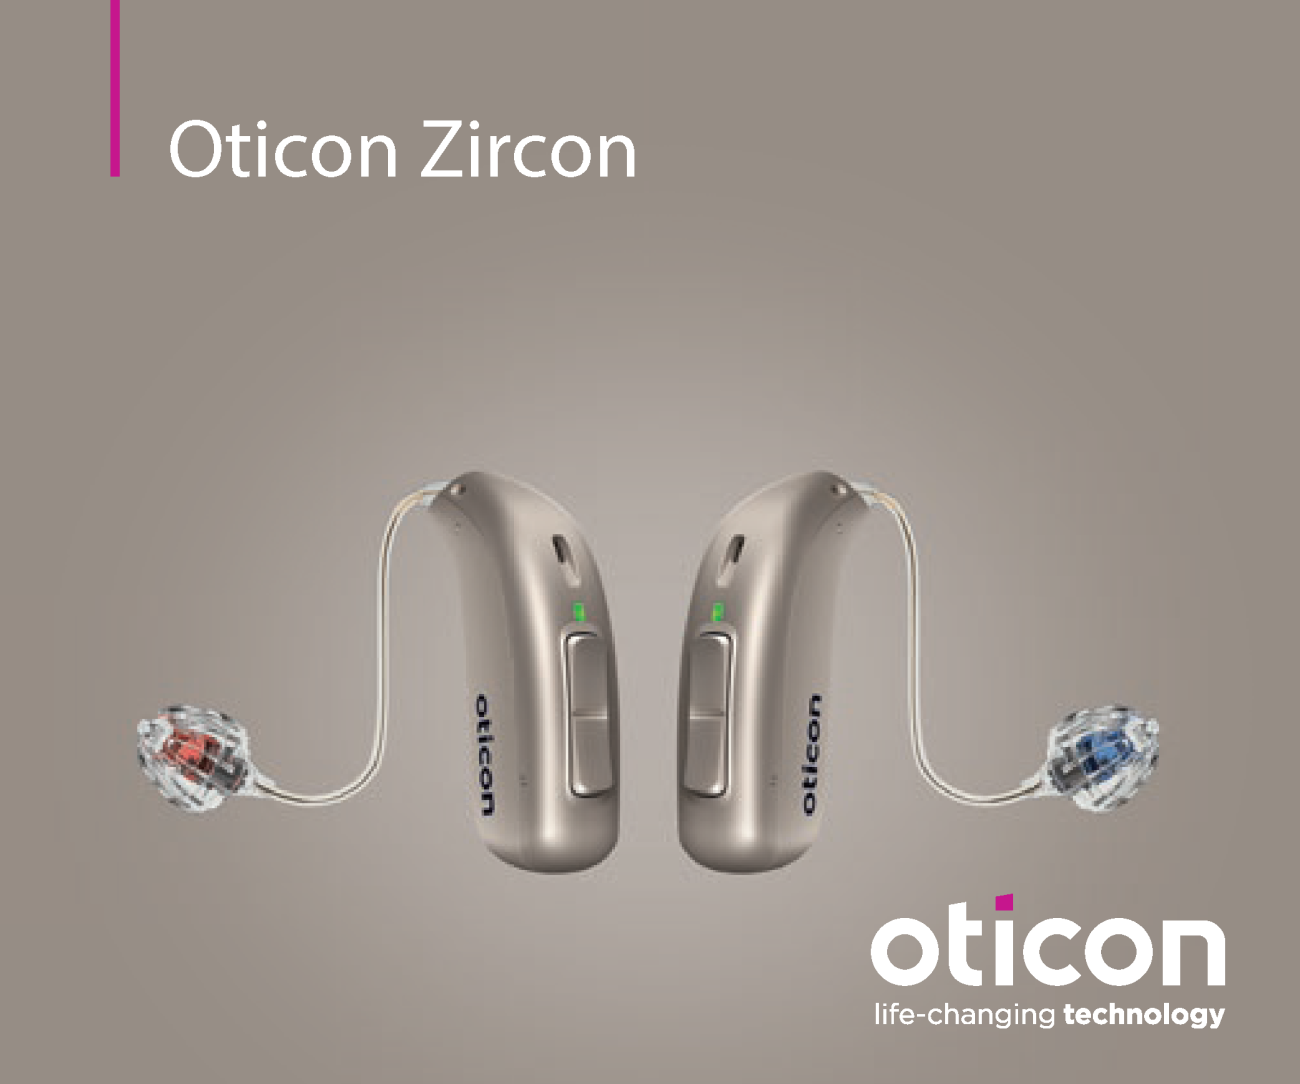 Das Hörgerät Zircon von Oticon